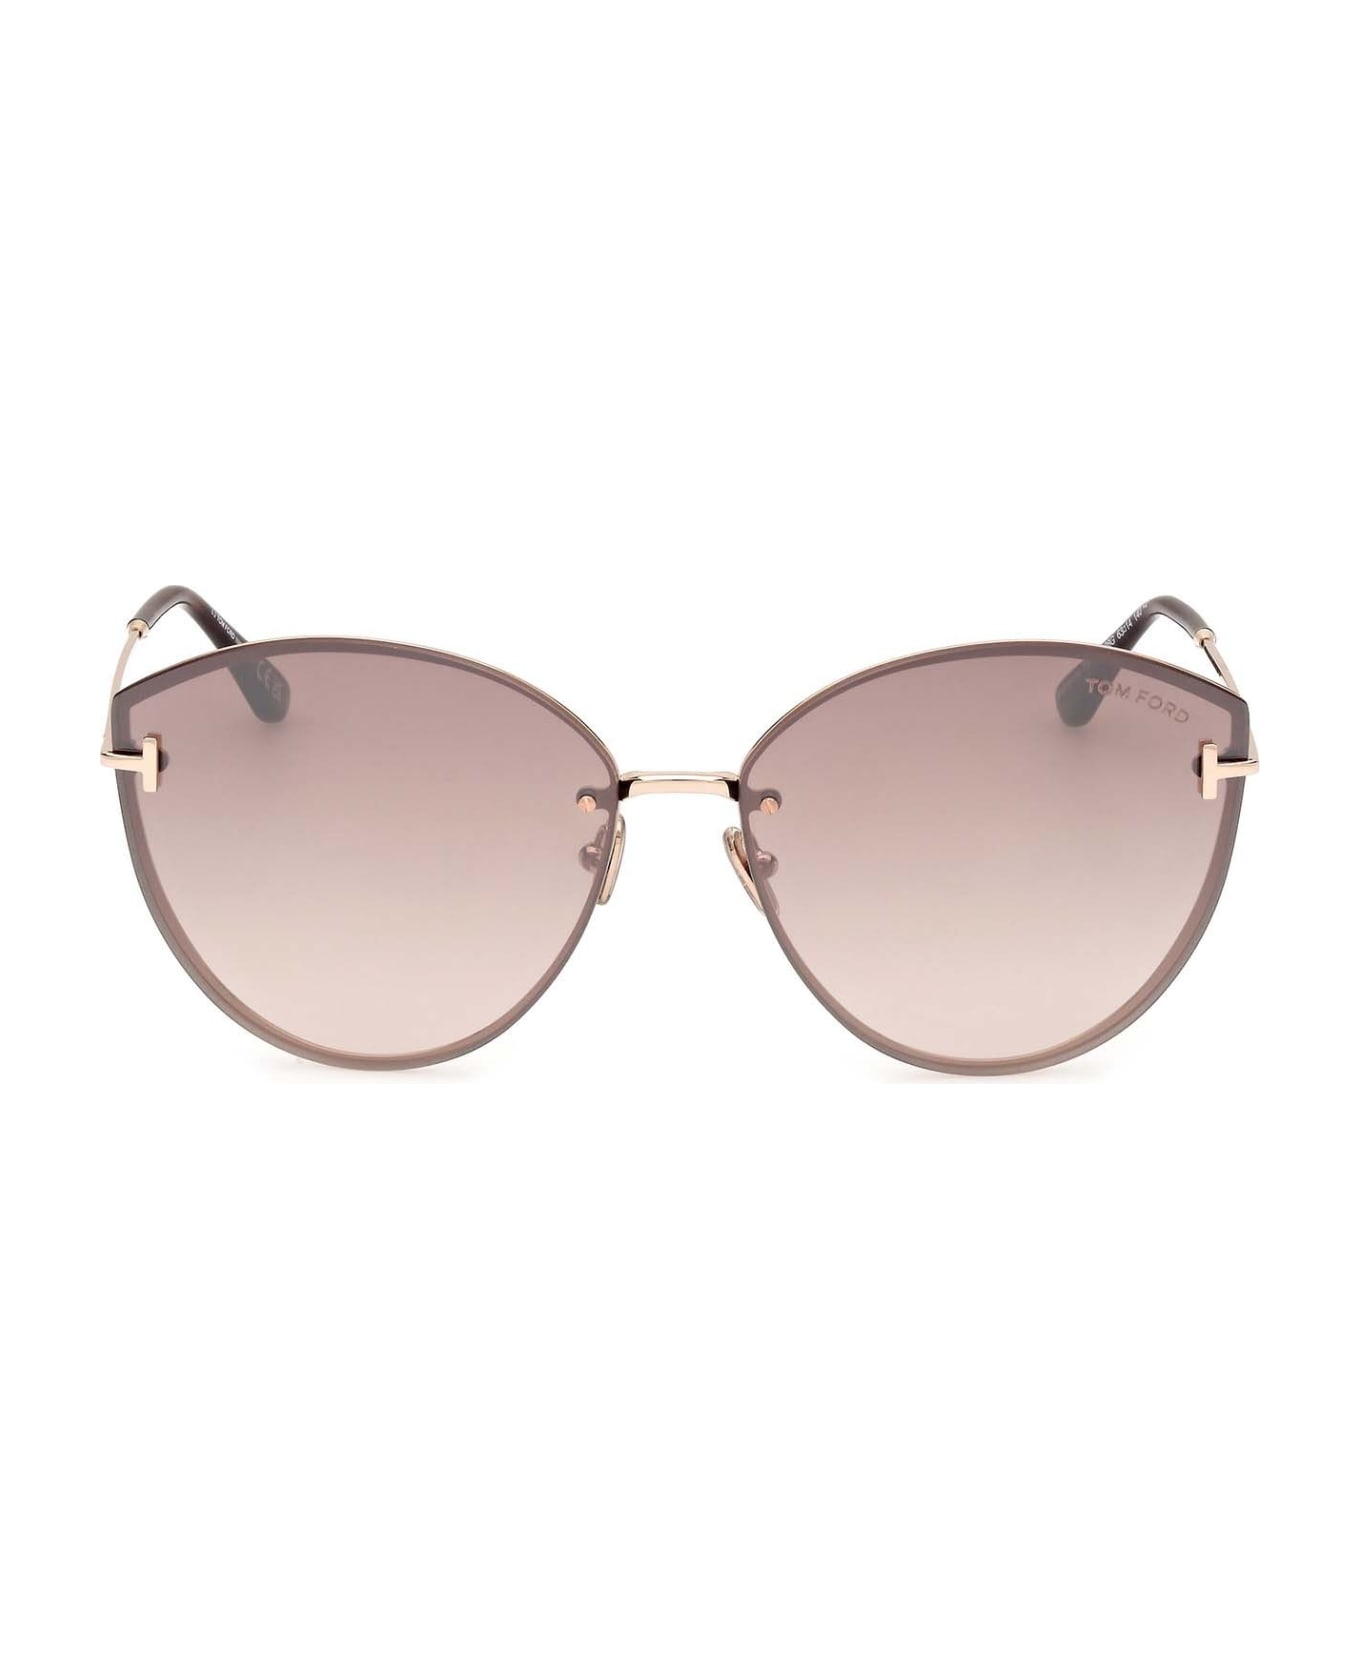 Tom Ford Eyewear Sunglasses - Rosa/Rosa